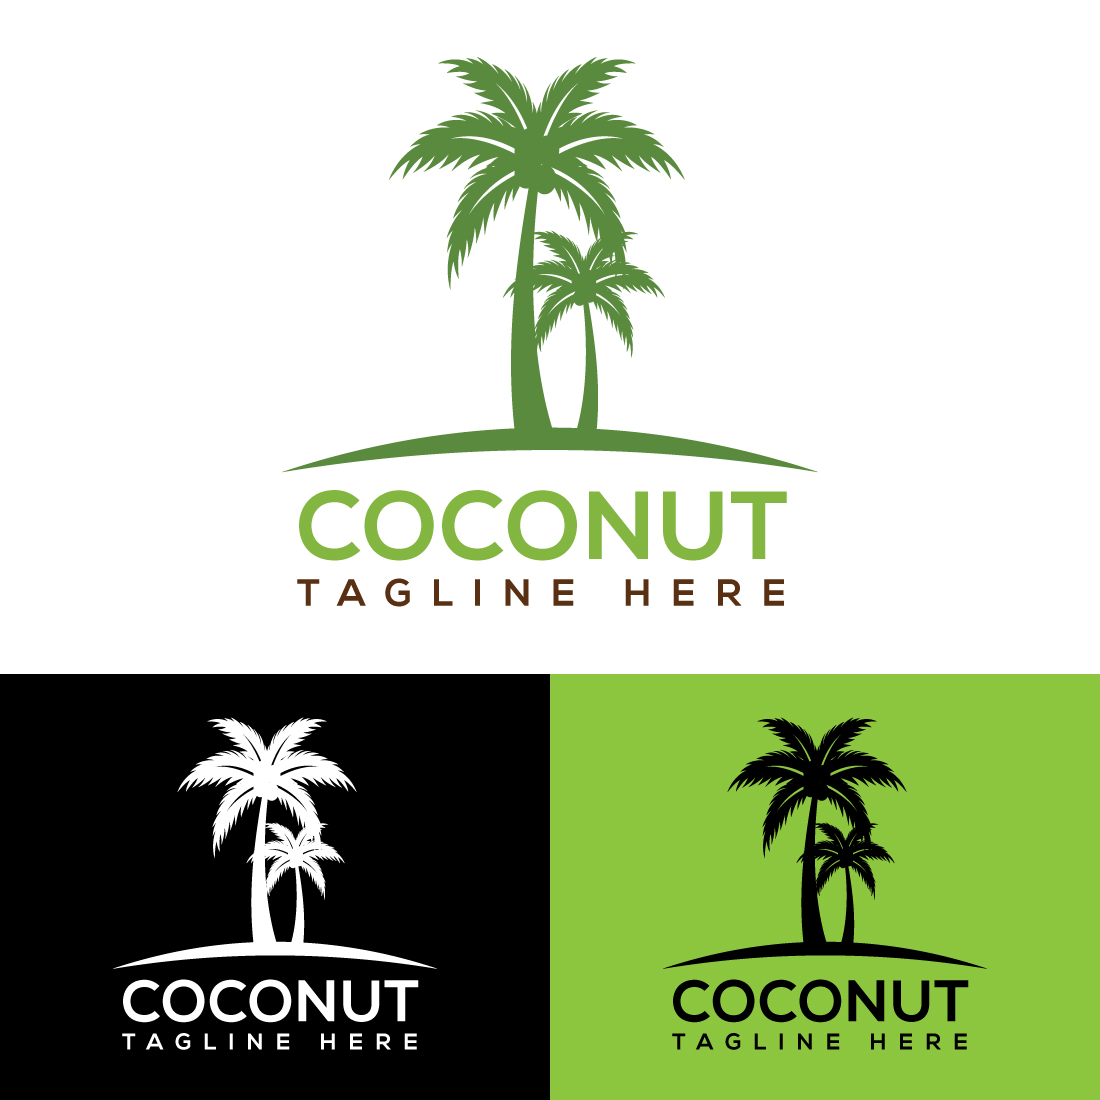 Coconut Tree Logo Design cover image.